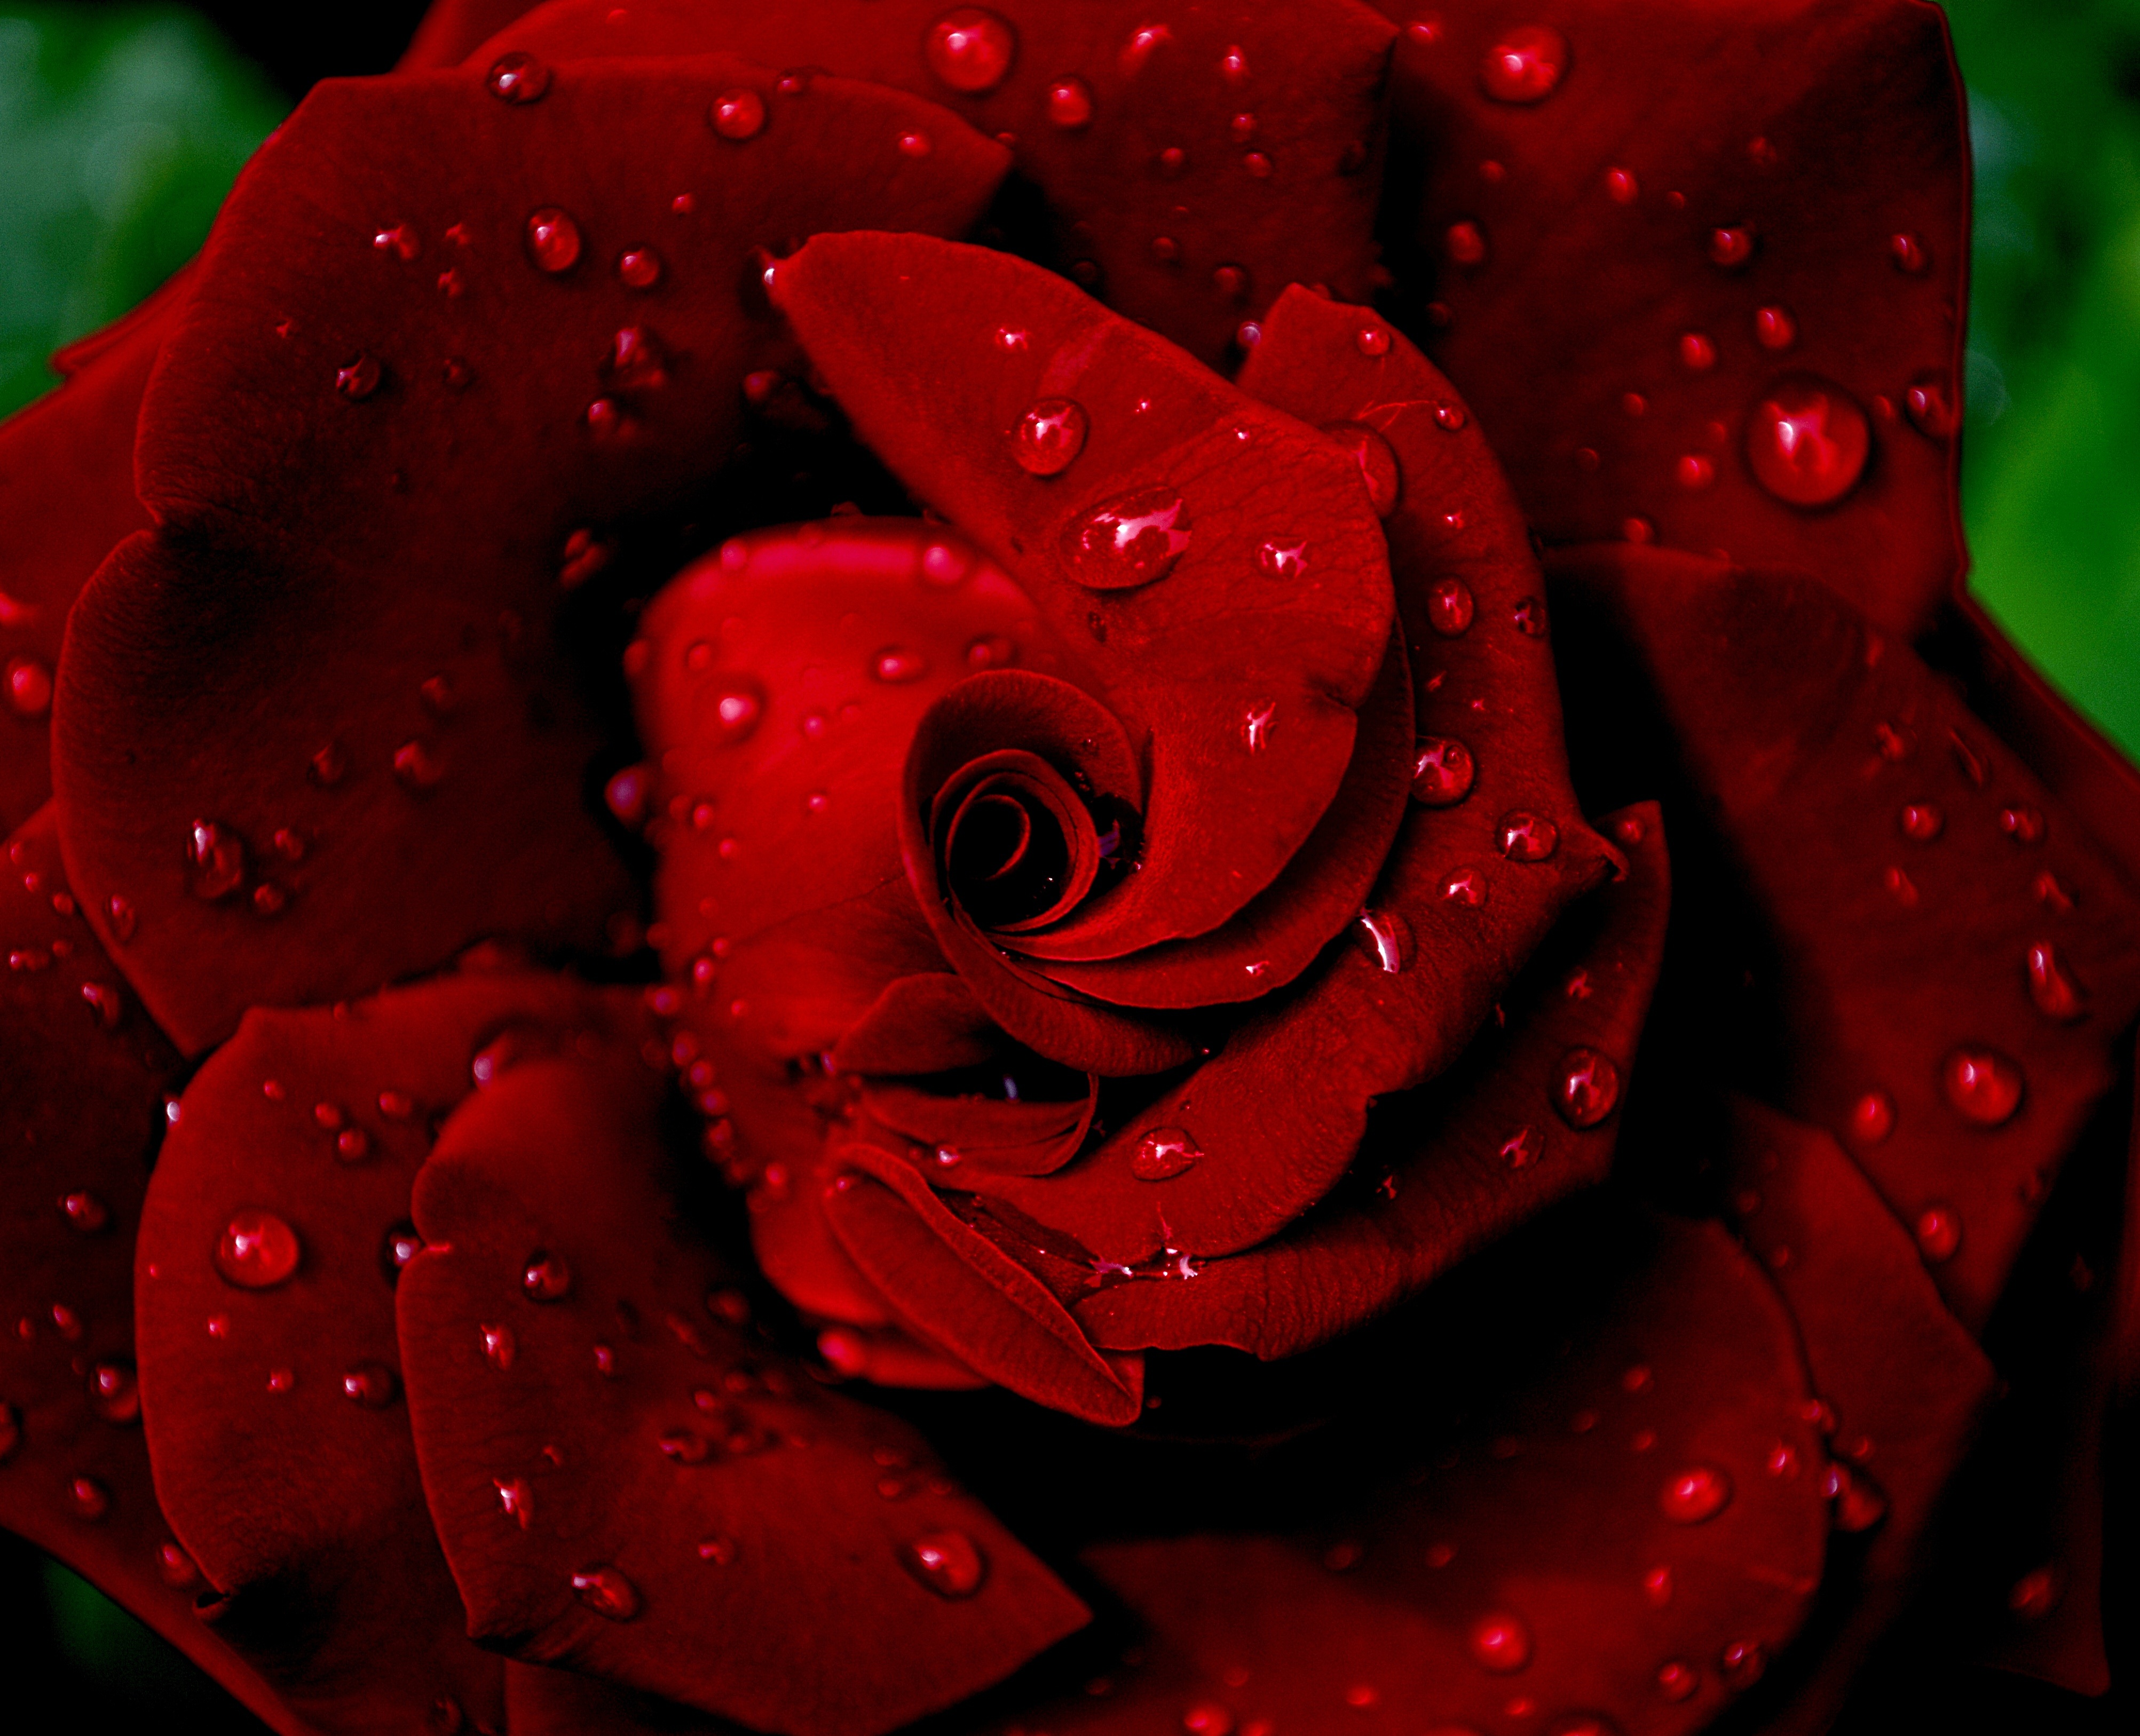 rose flower, red, flowers, drops, rose, petals, wet, dew